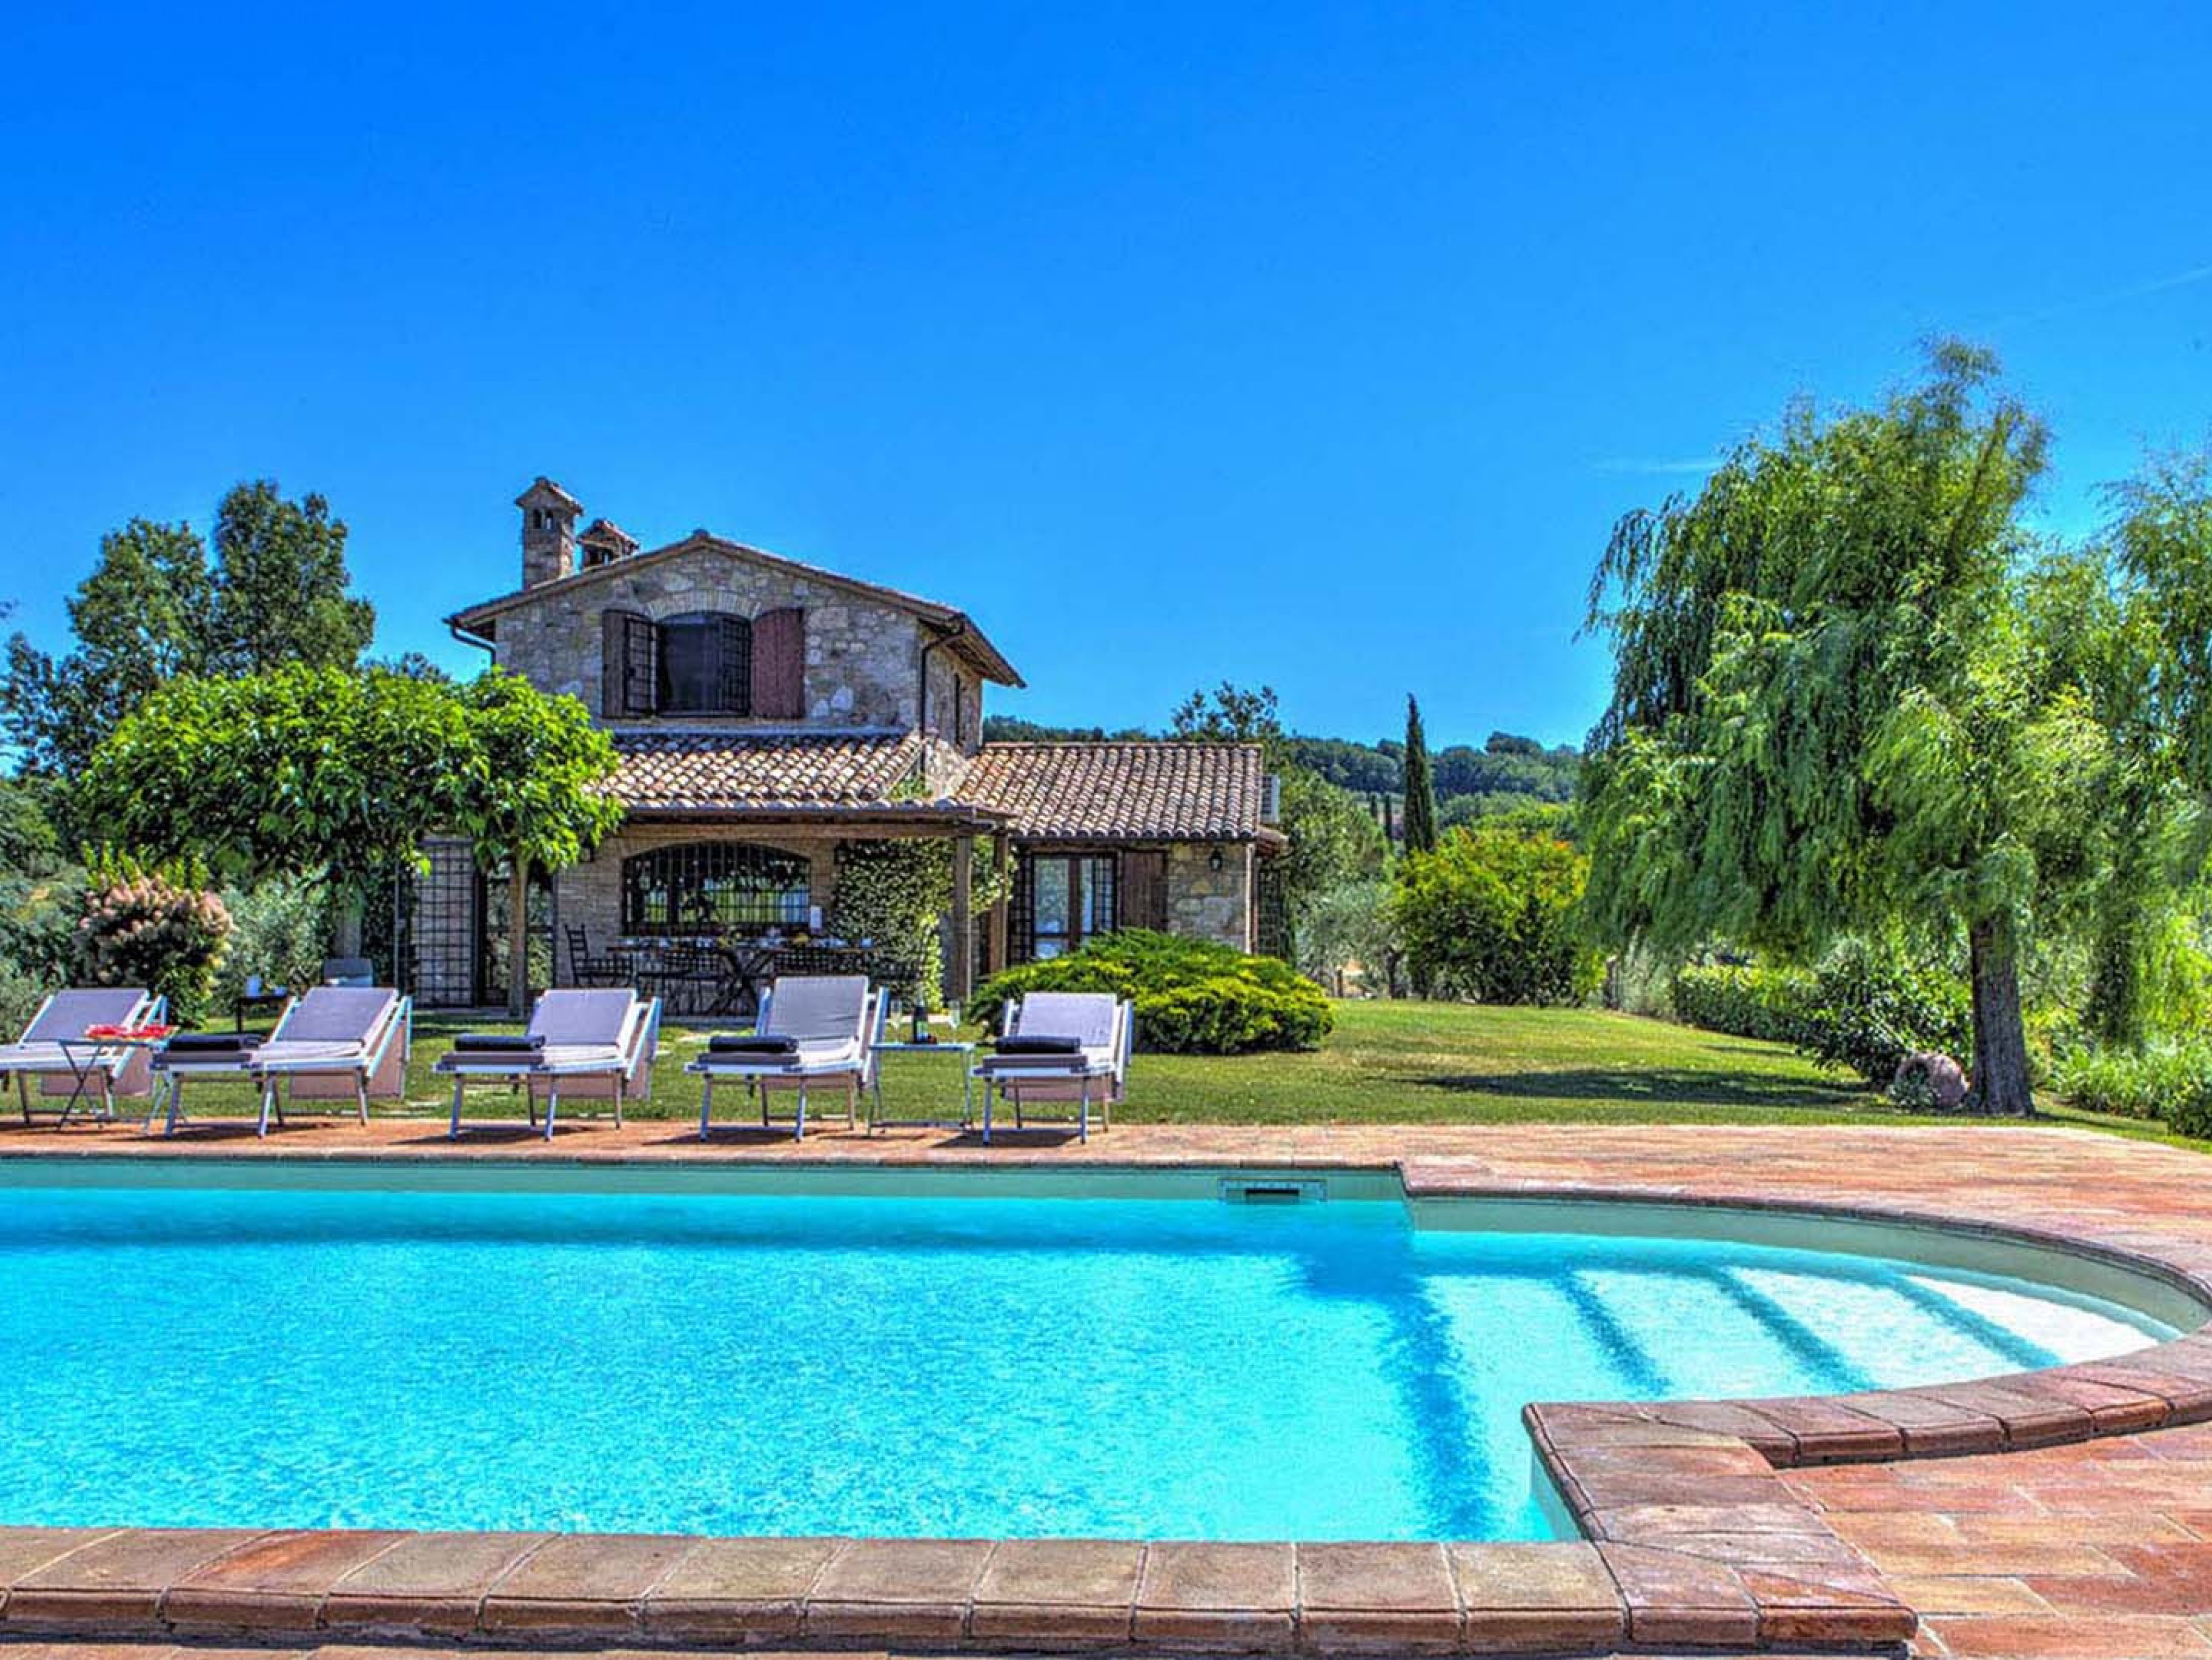 Casa Del Salice Umbria villa rentals with pool